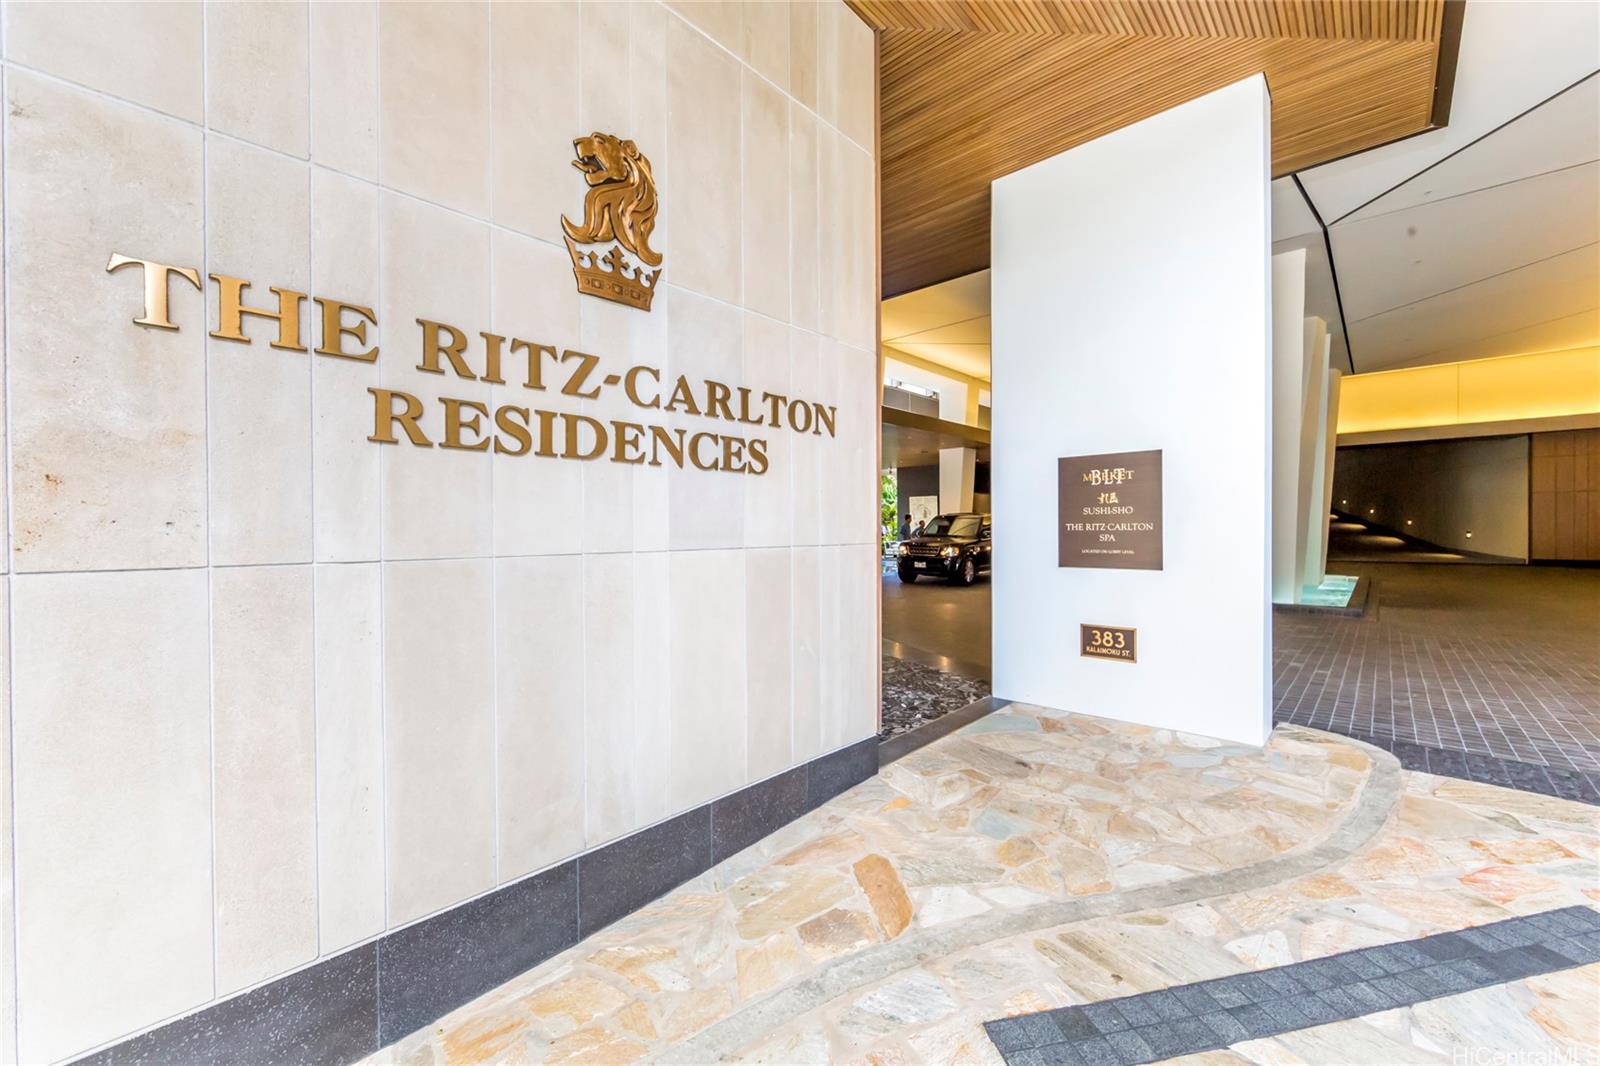 The Ritz-carlton Residences Twr 2 - 383  2139 Kuhio Avenue  Unit 1011